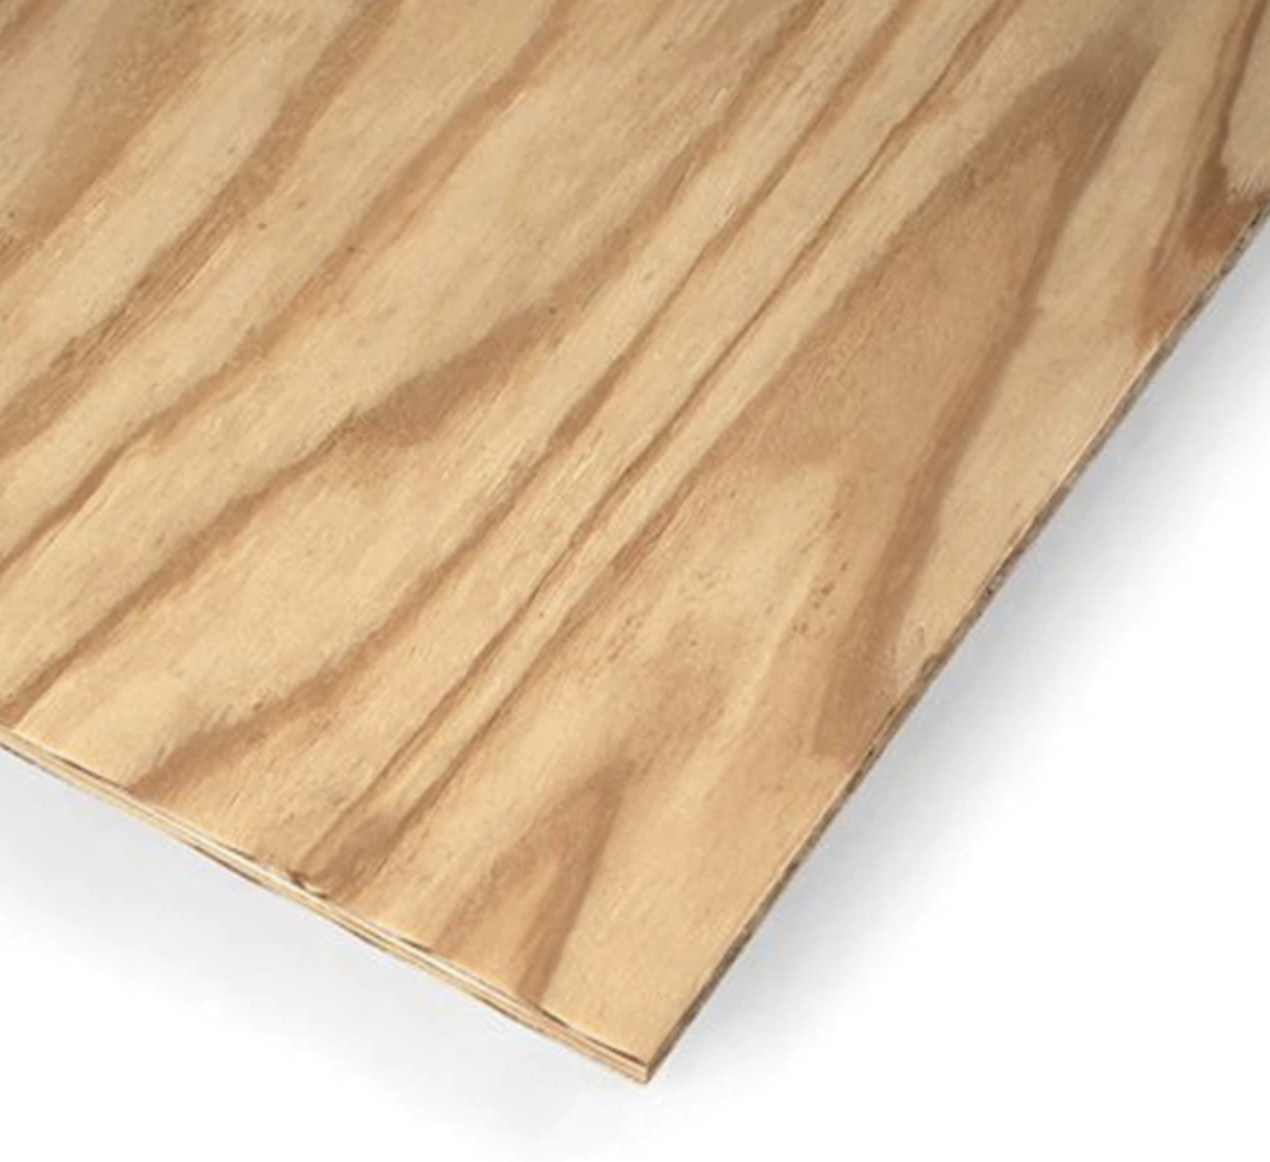 2' x 4' x 15/32" Pine Sanded Plywood